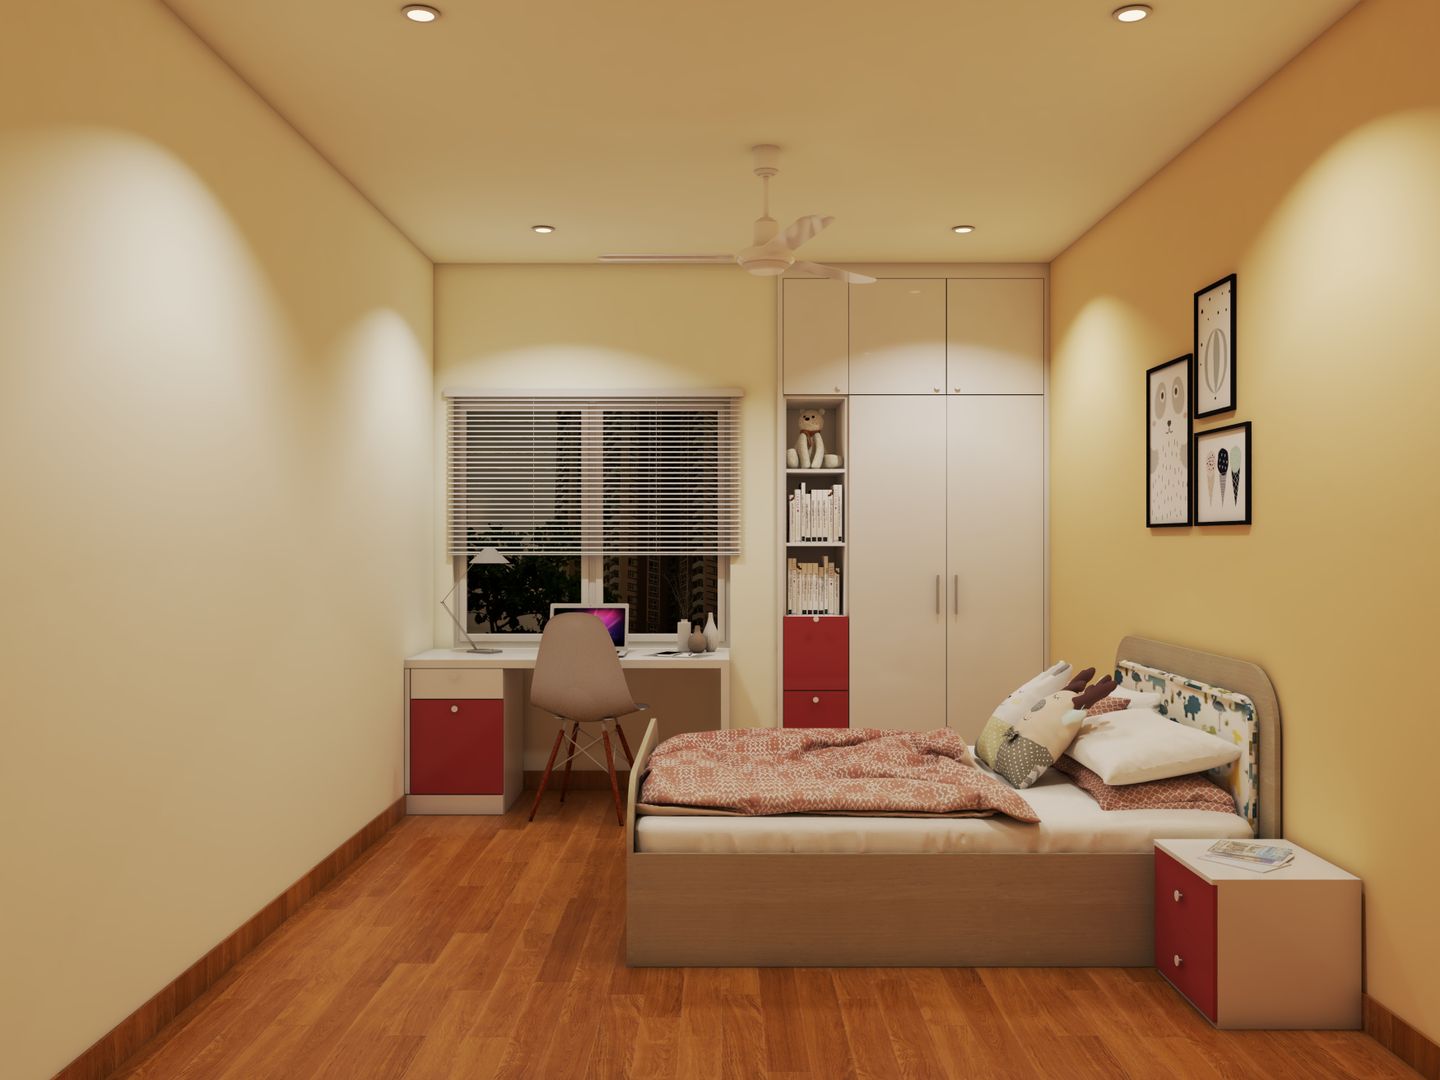 Spacious Bedroom with Wooden Flooring - Livspace